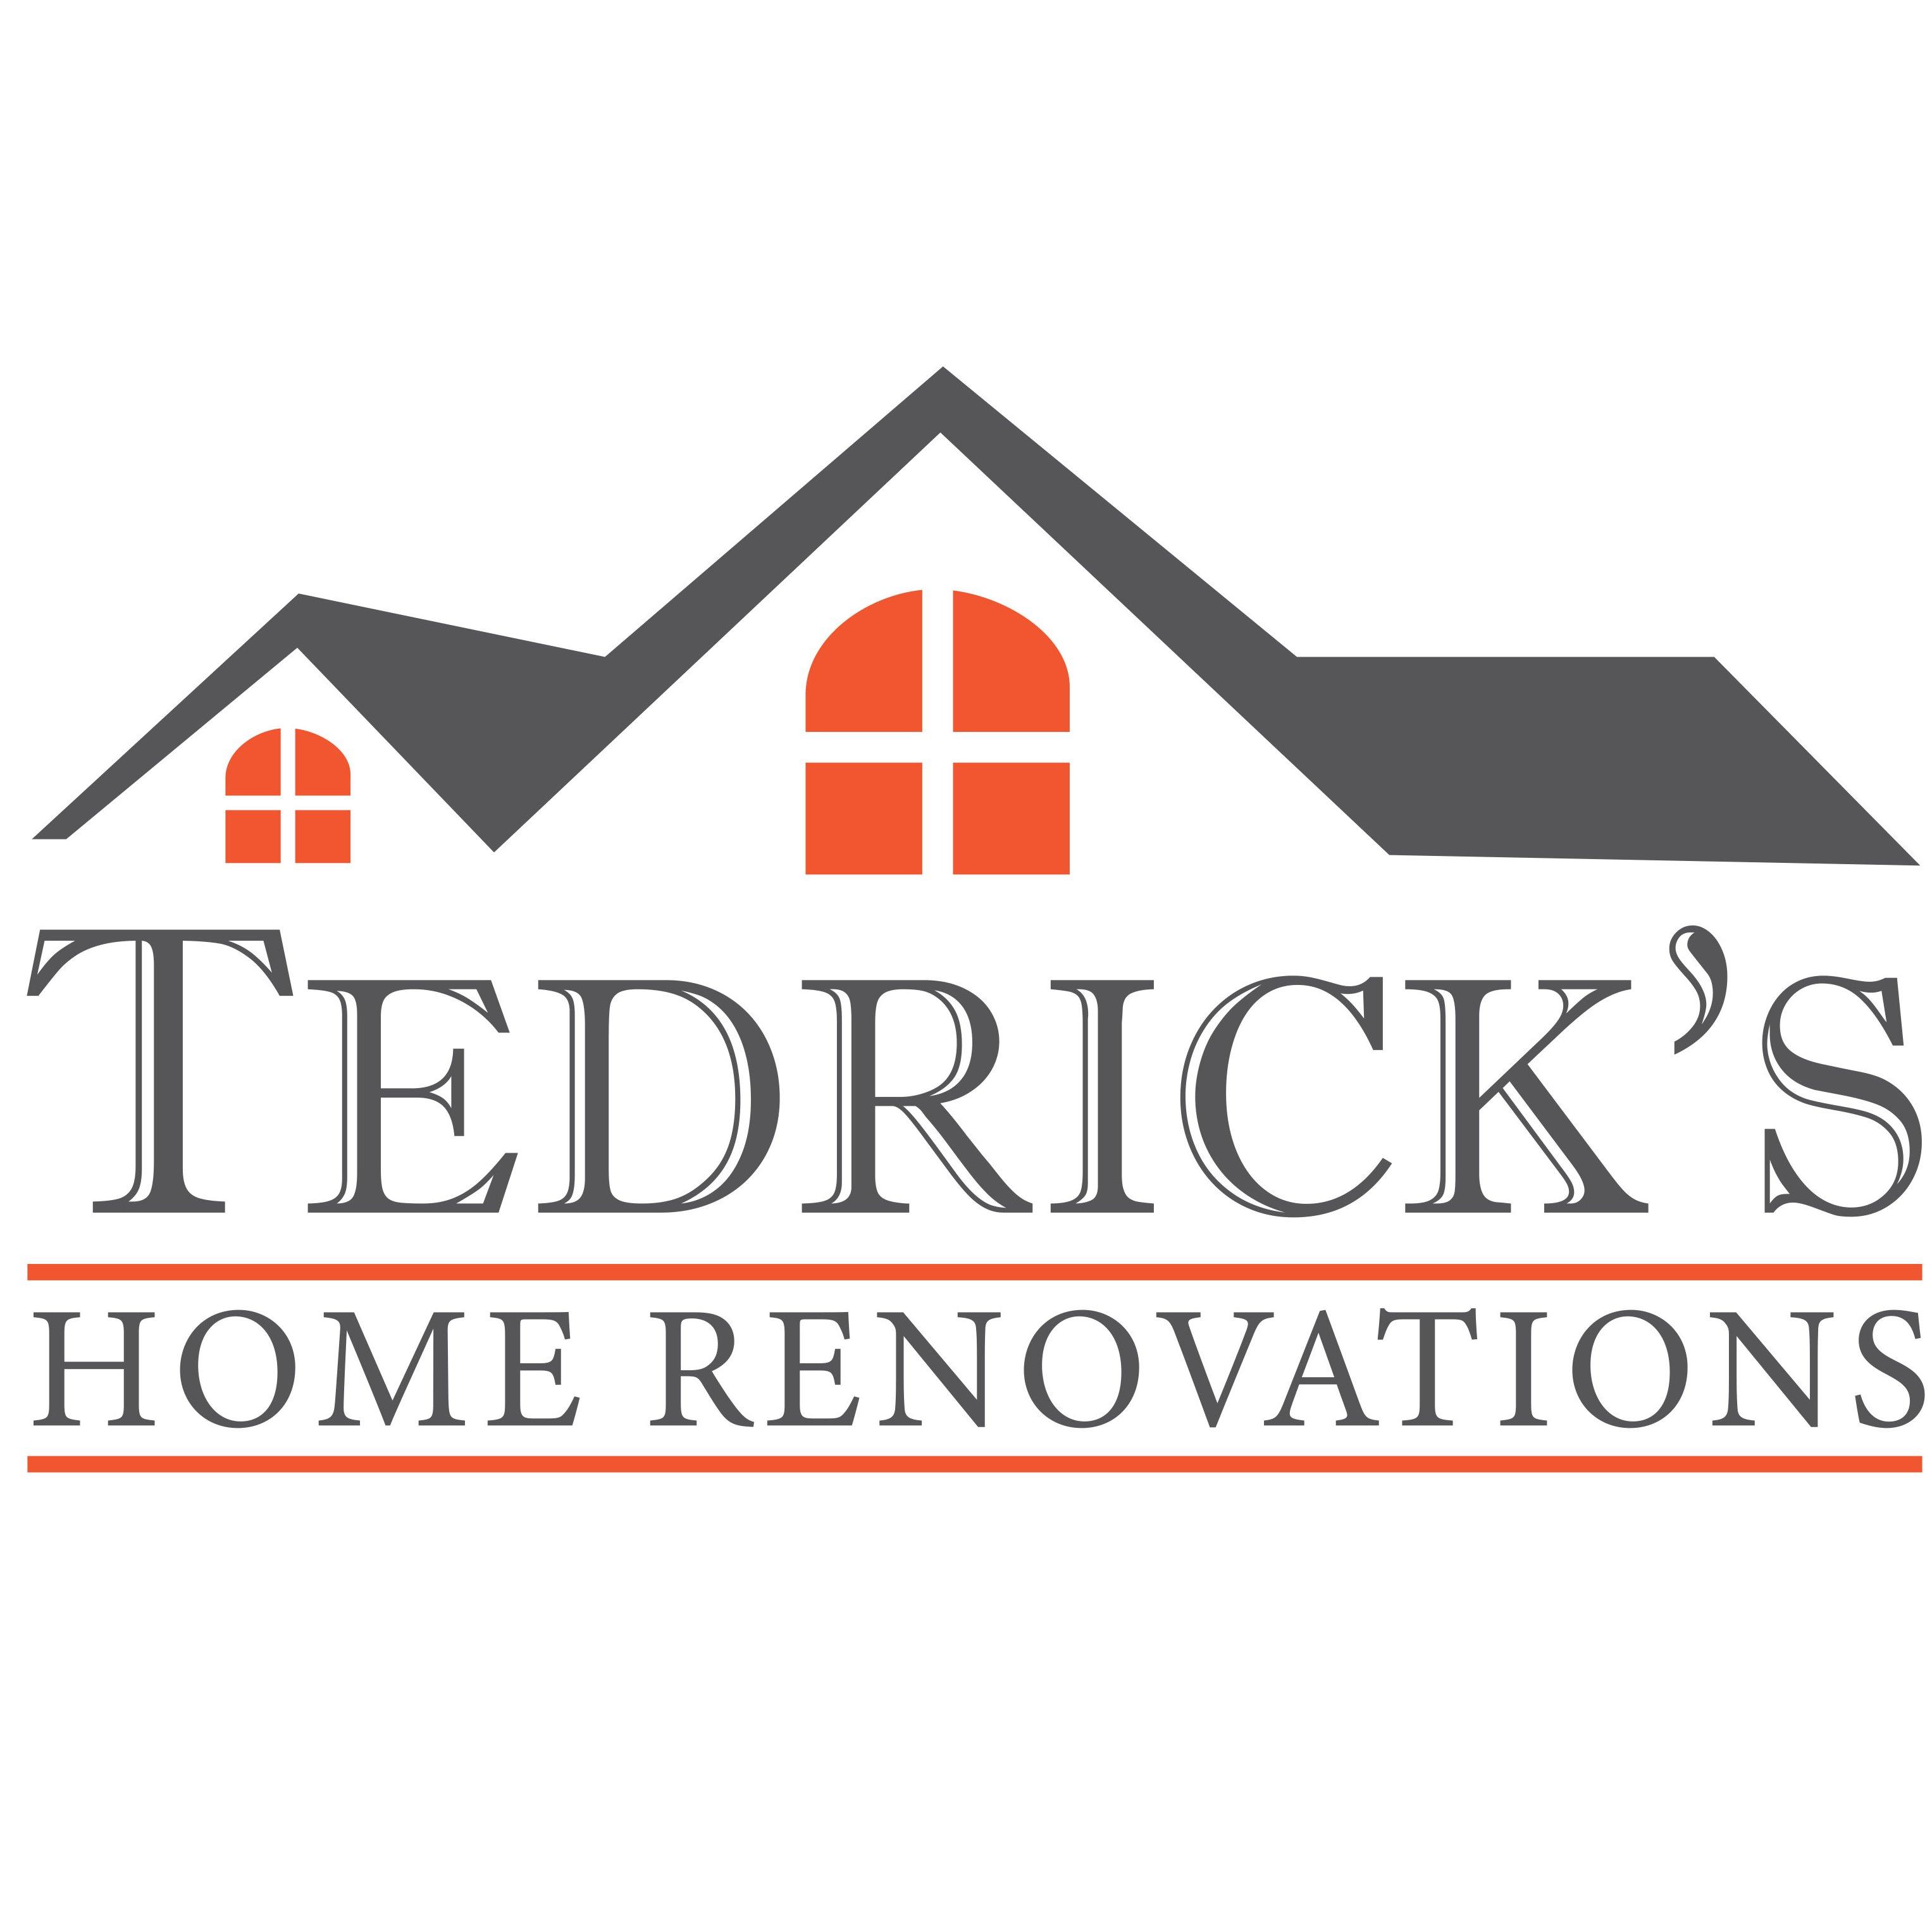 Tedrick's Home Renovations - Springfield, IL 62702 - (217)891-7271 | ShowMeLocal.com